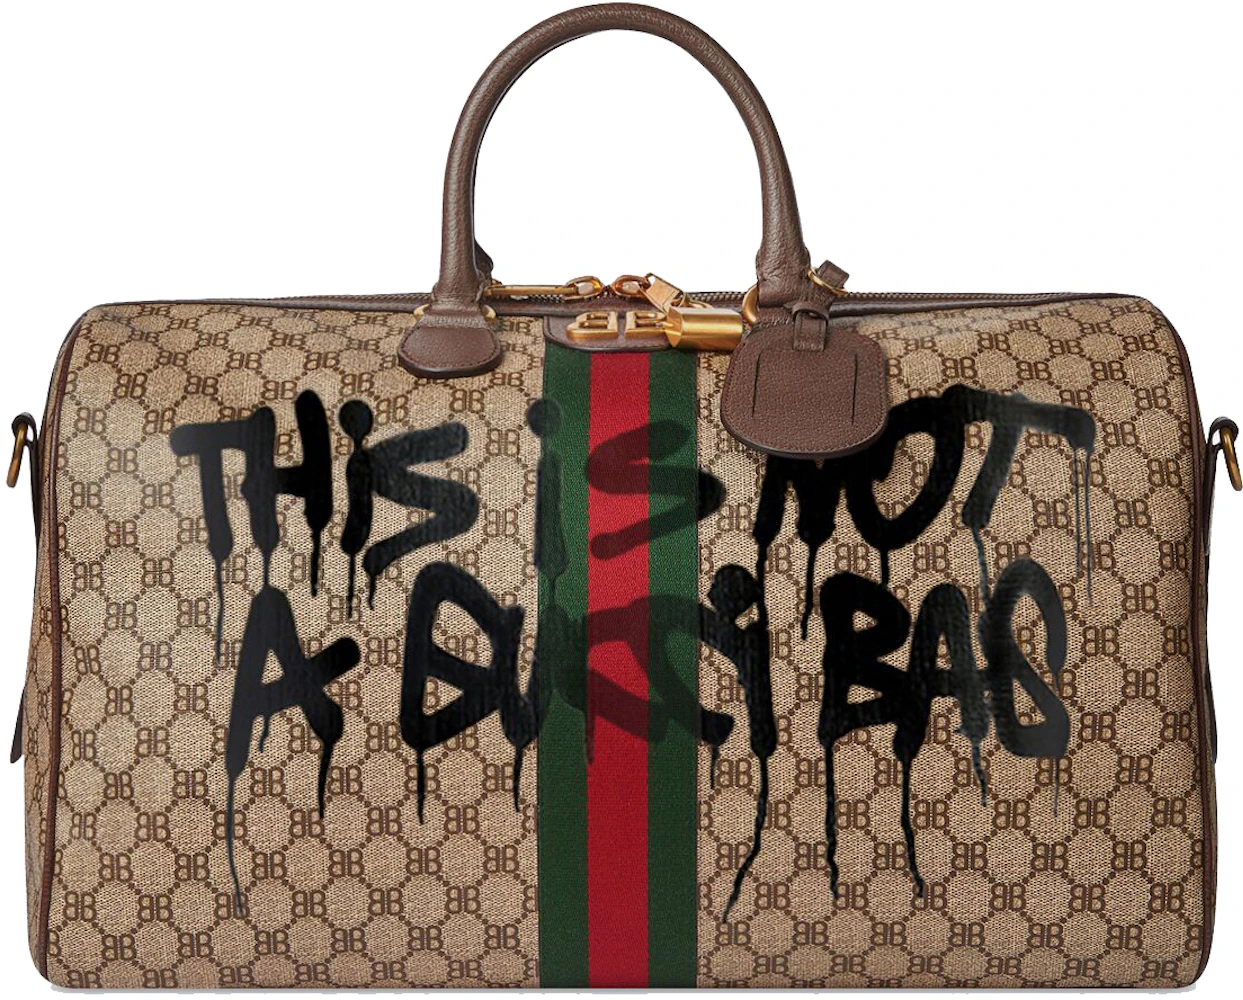 Gucci x Balenciaga The Hacker Project Graffiti Large Tote Bag